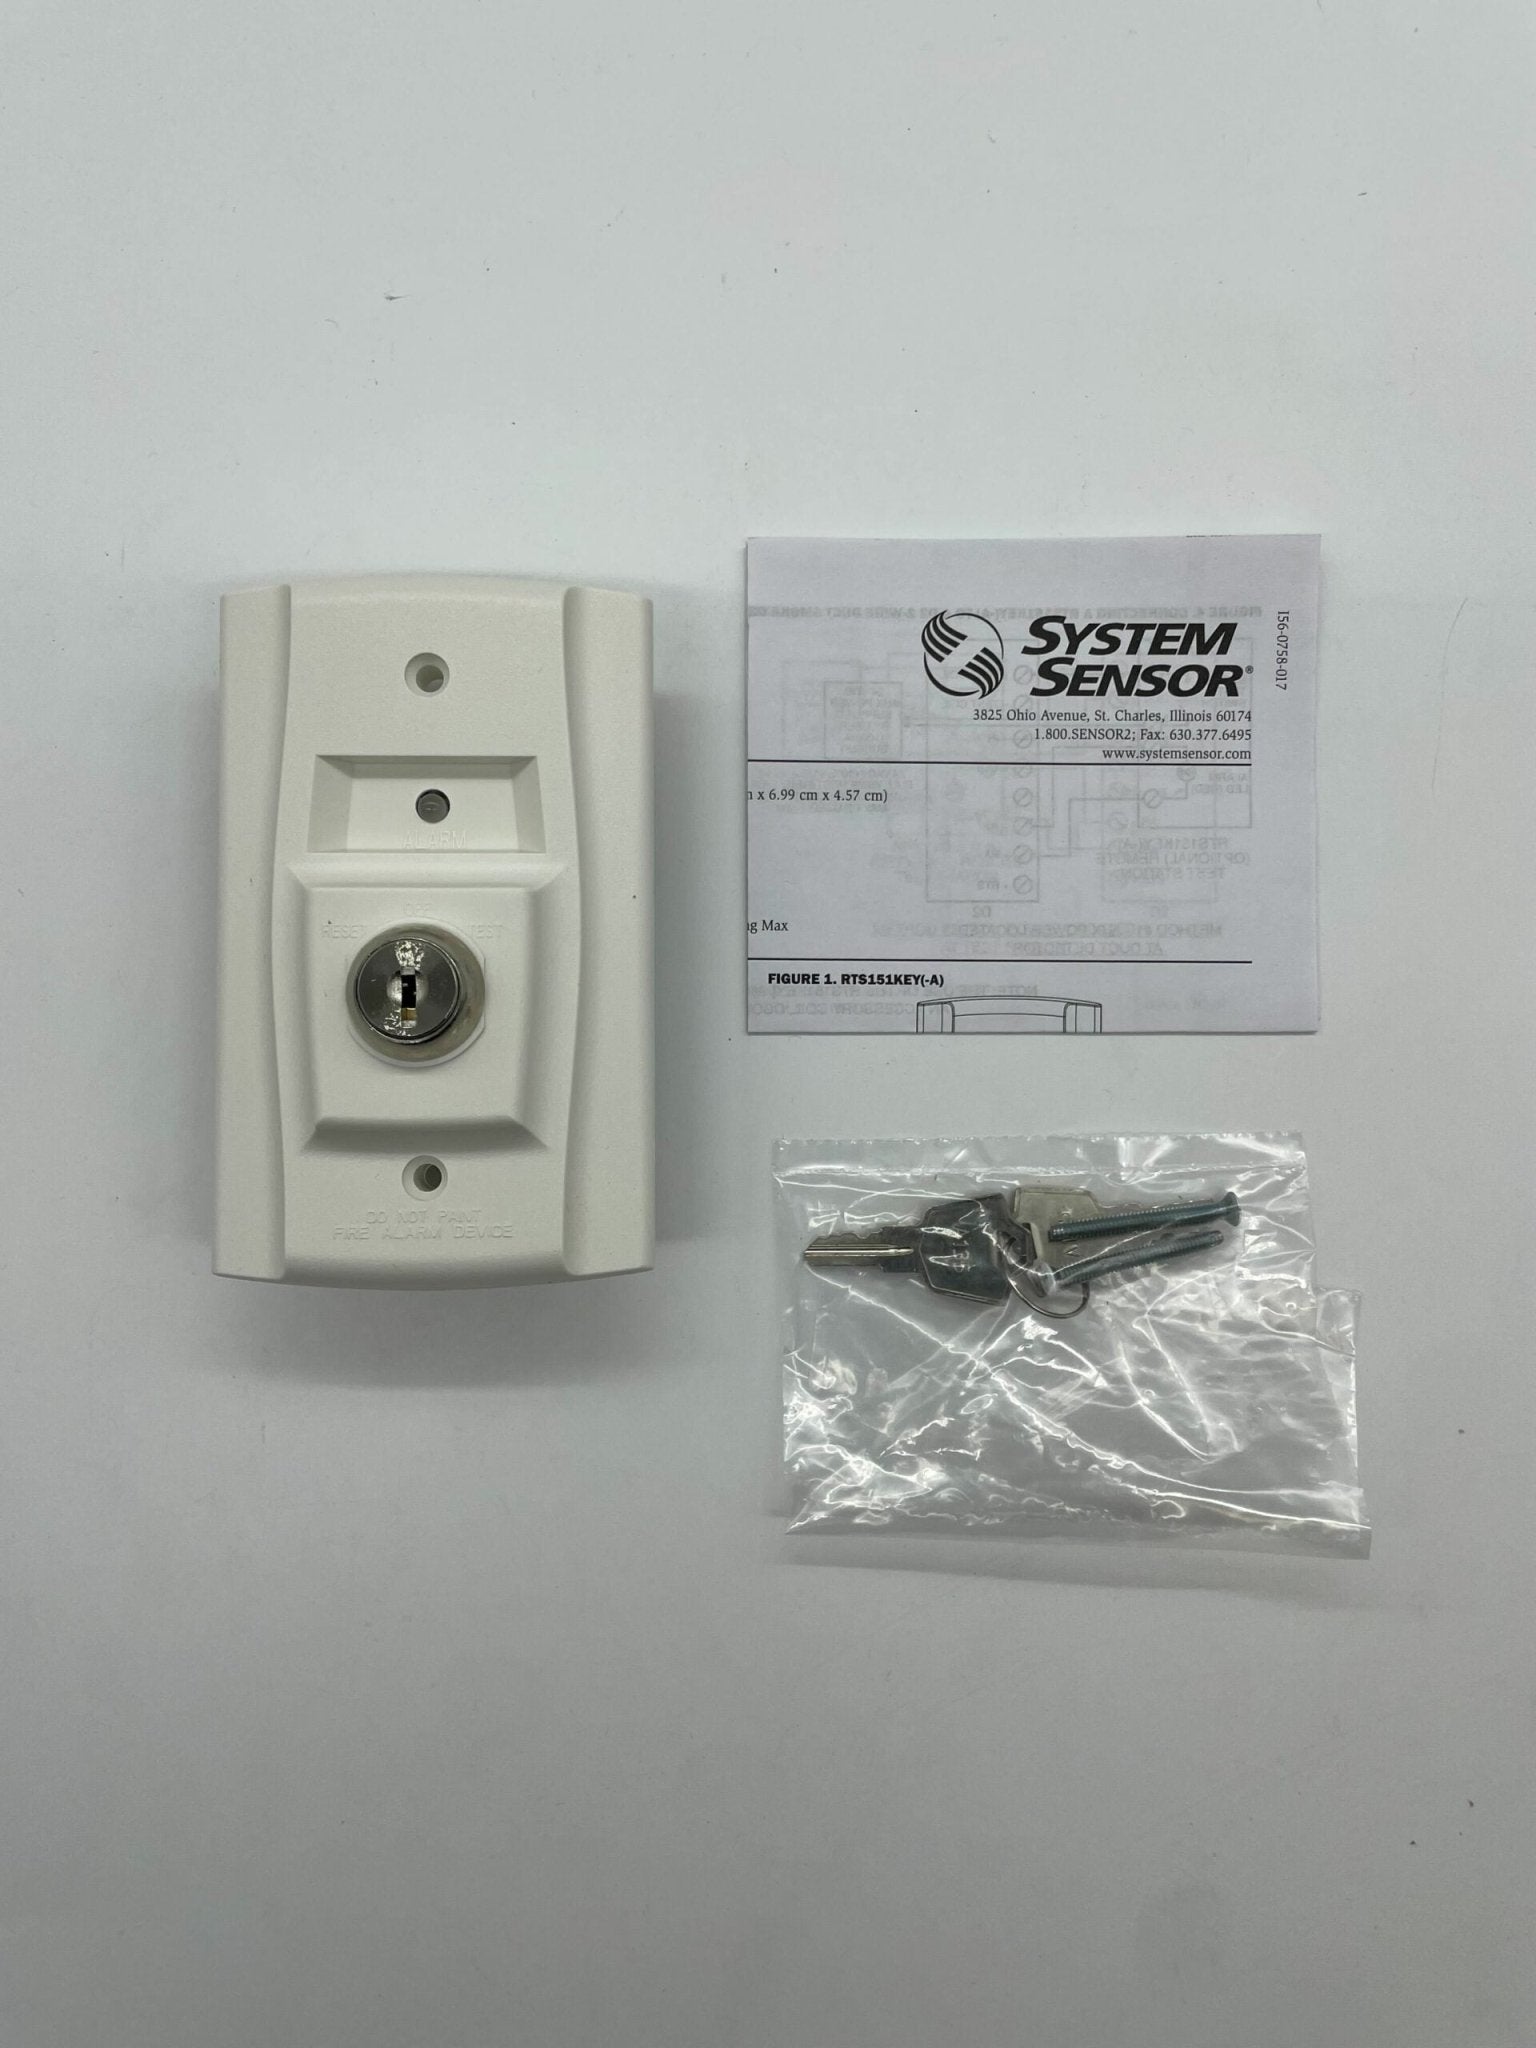 System Sensor RTS151KEY - The Fire Alarm Supplier